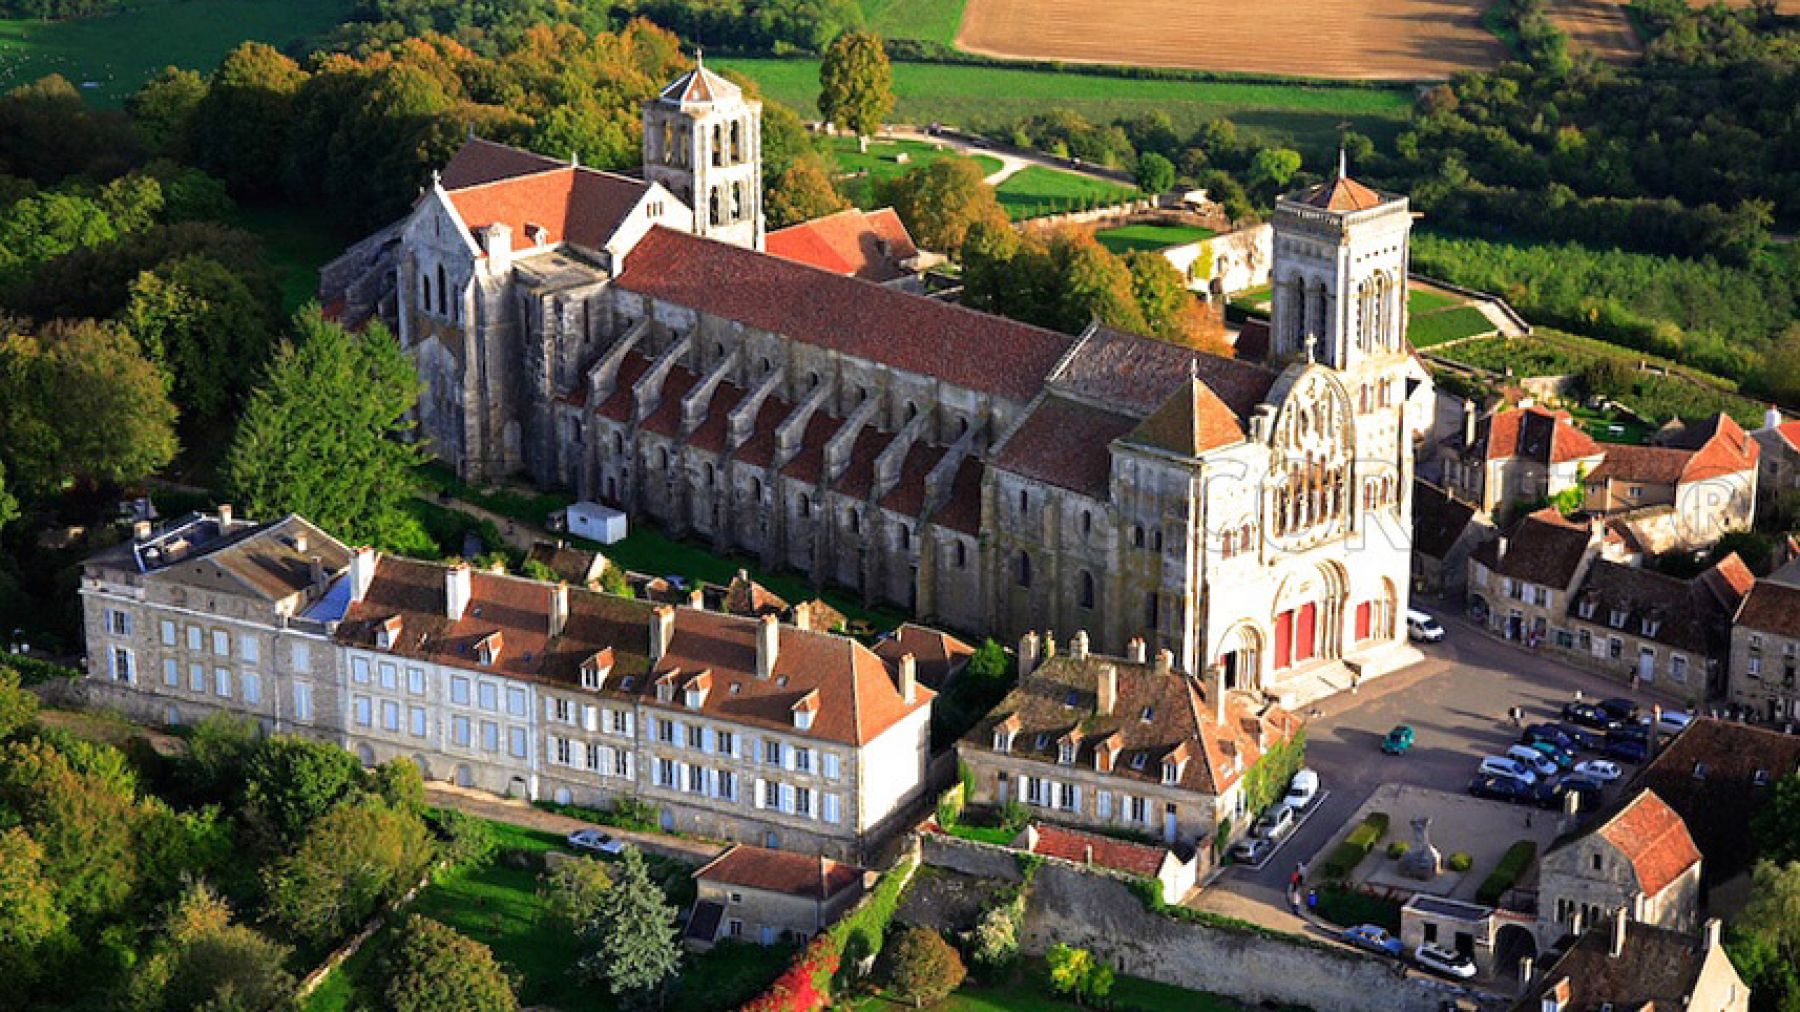 Vézelay Basilica: a building with a rich history